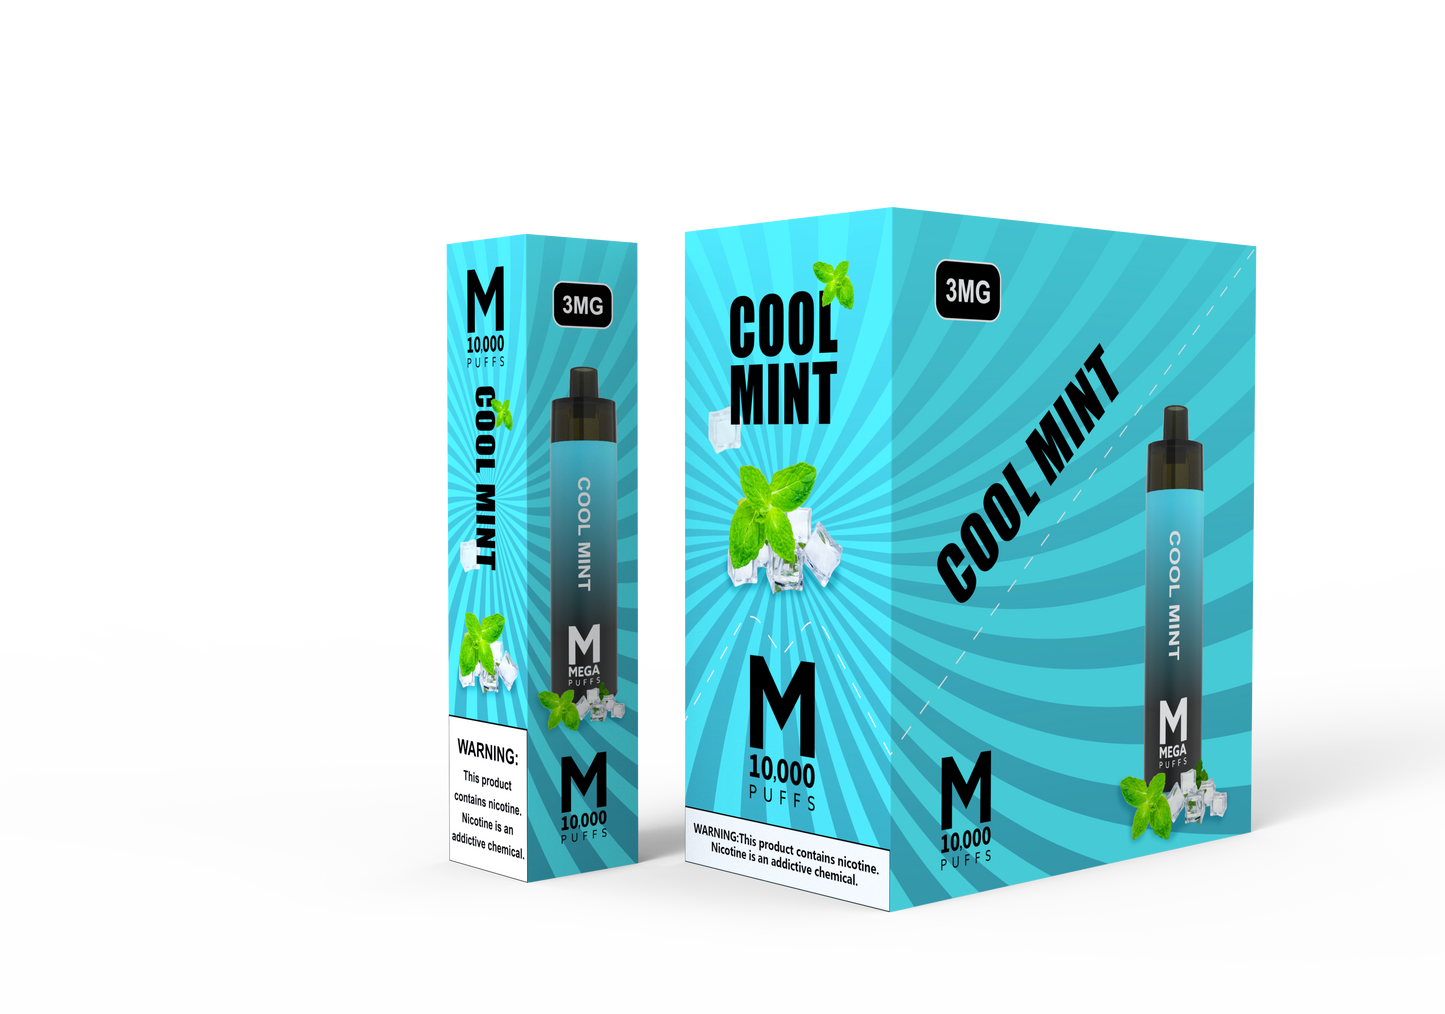 (8 unidades) Mod de vapeo desechable Mega 10,000 inhalaciones Cool Mint $10.99 c/u